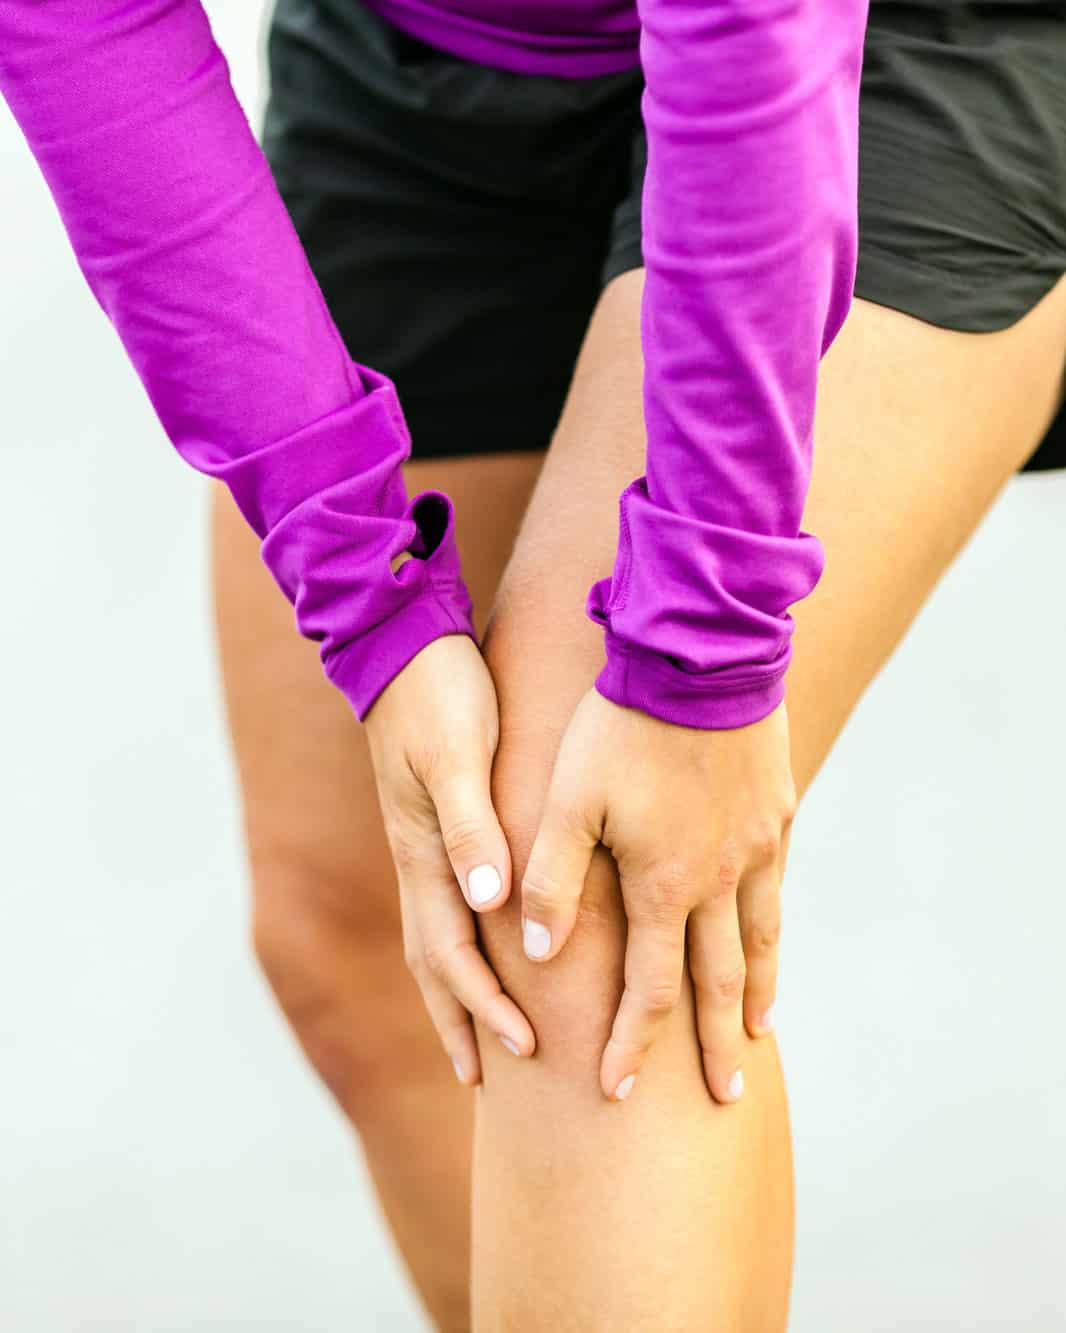 woman grabbing her knee in pain